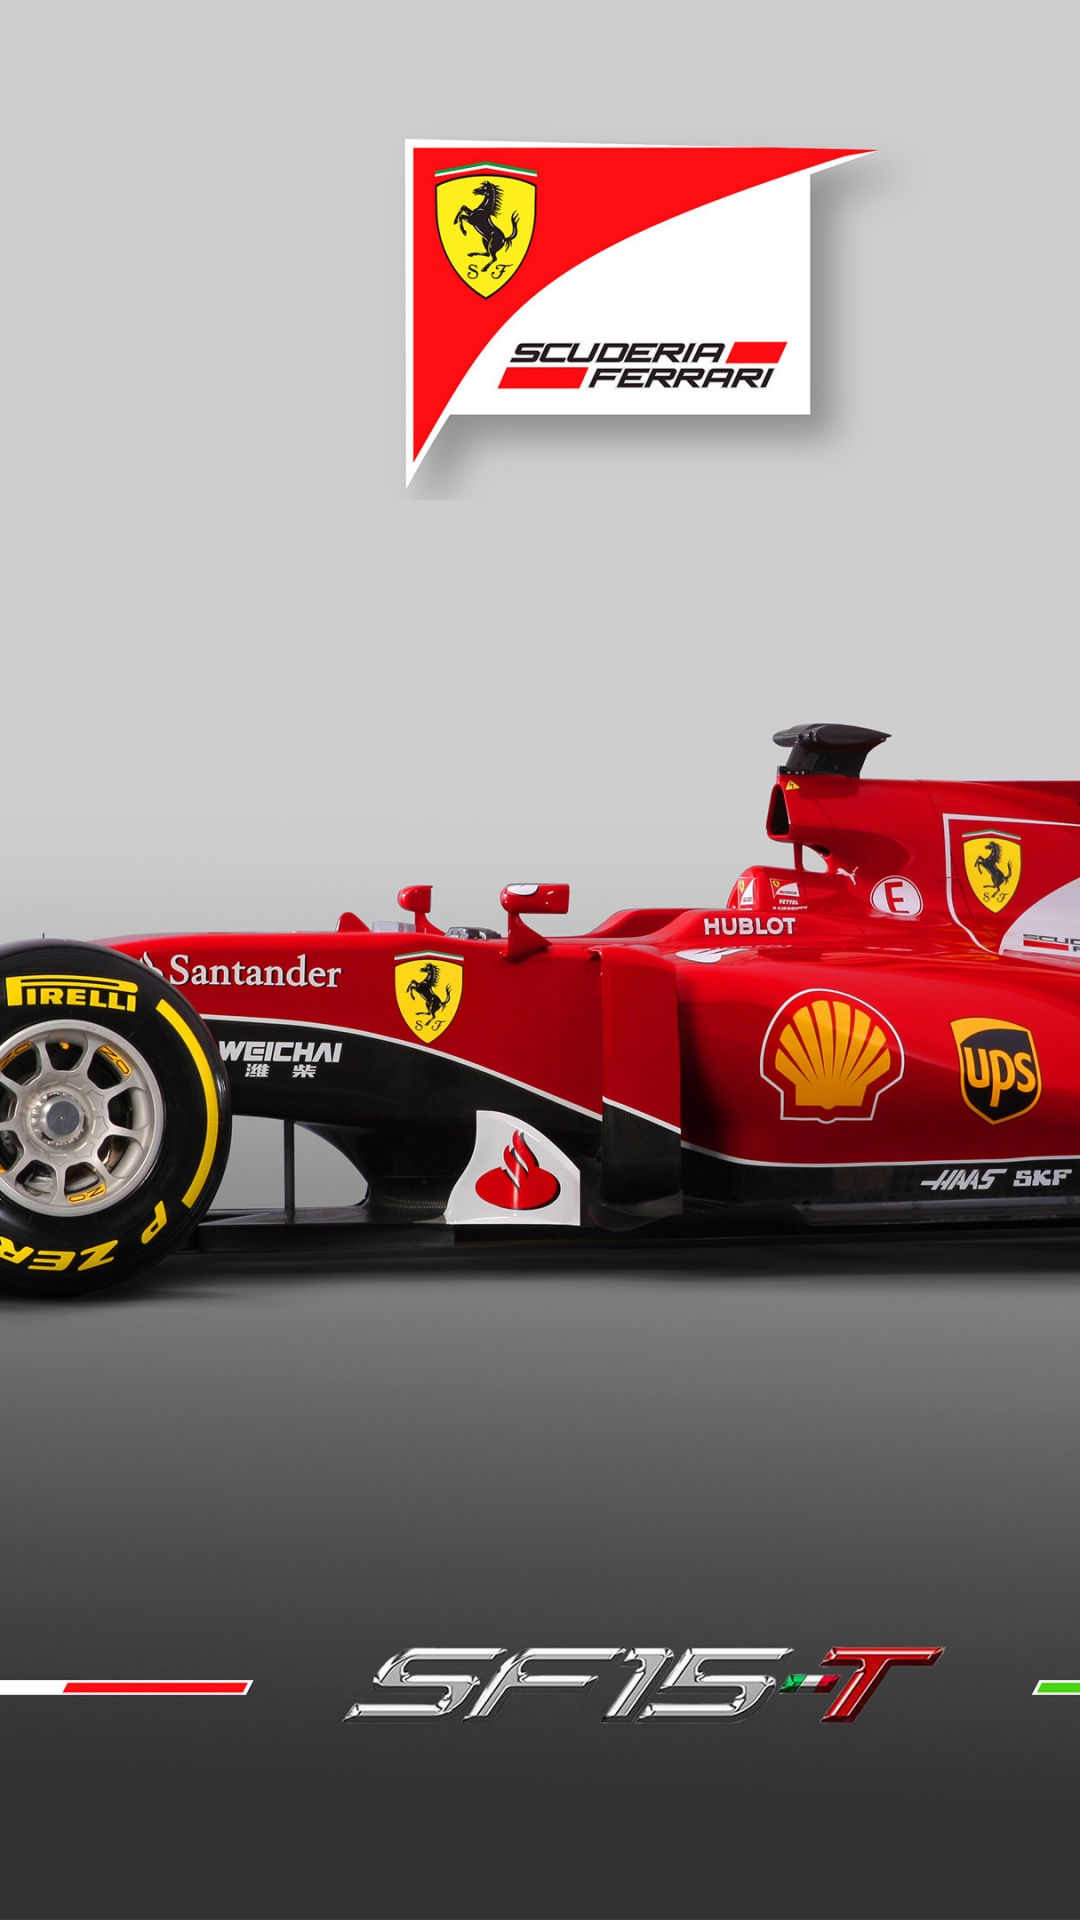 Scuderia Ferrari Wallpaper for IPhone 6S /7 /8 [Retina HD]